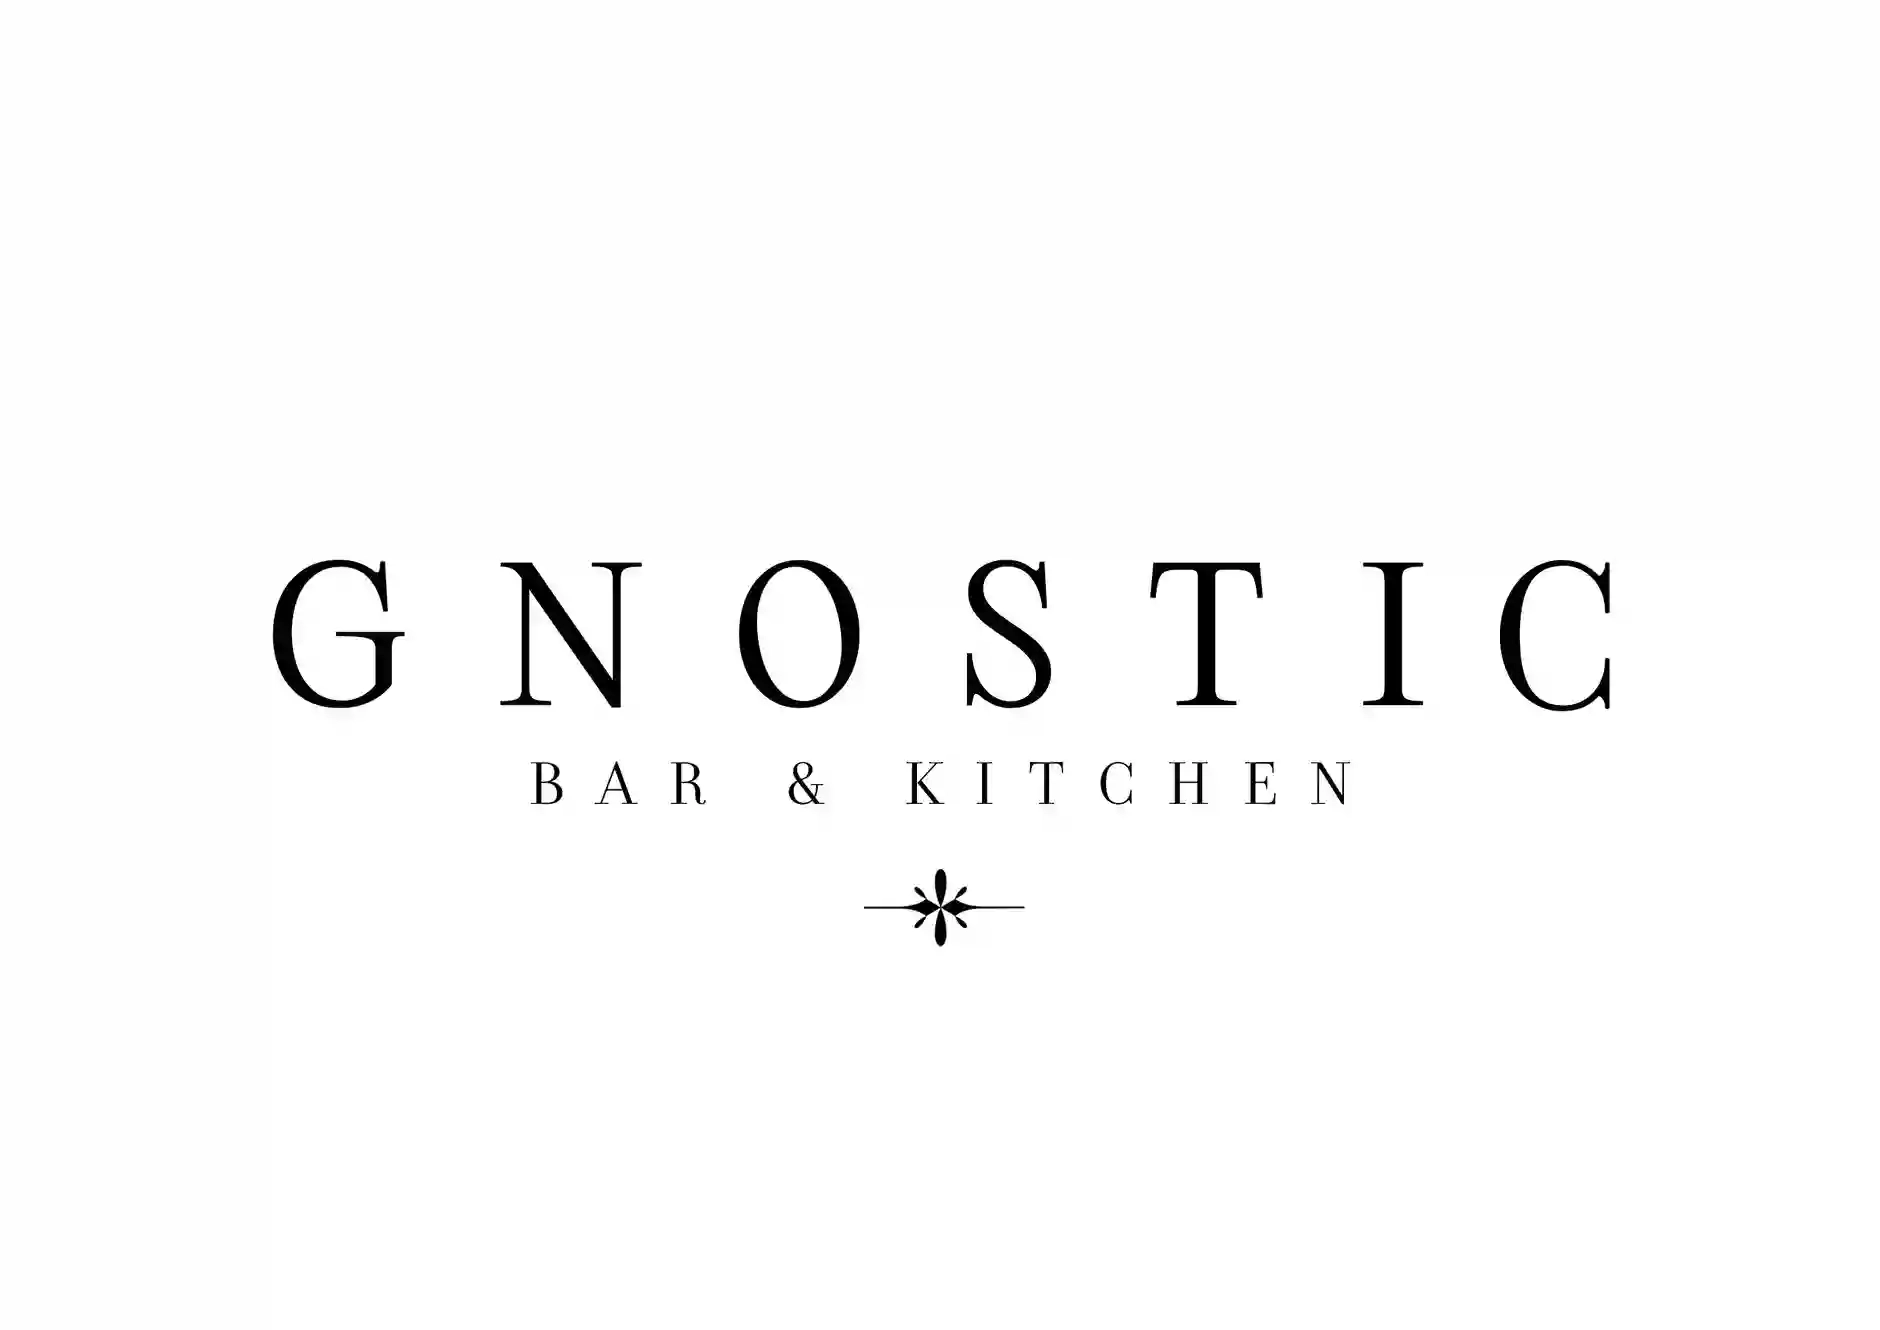 Gnostic Bar & Kitchen